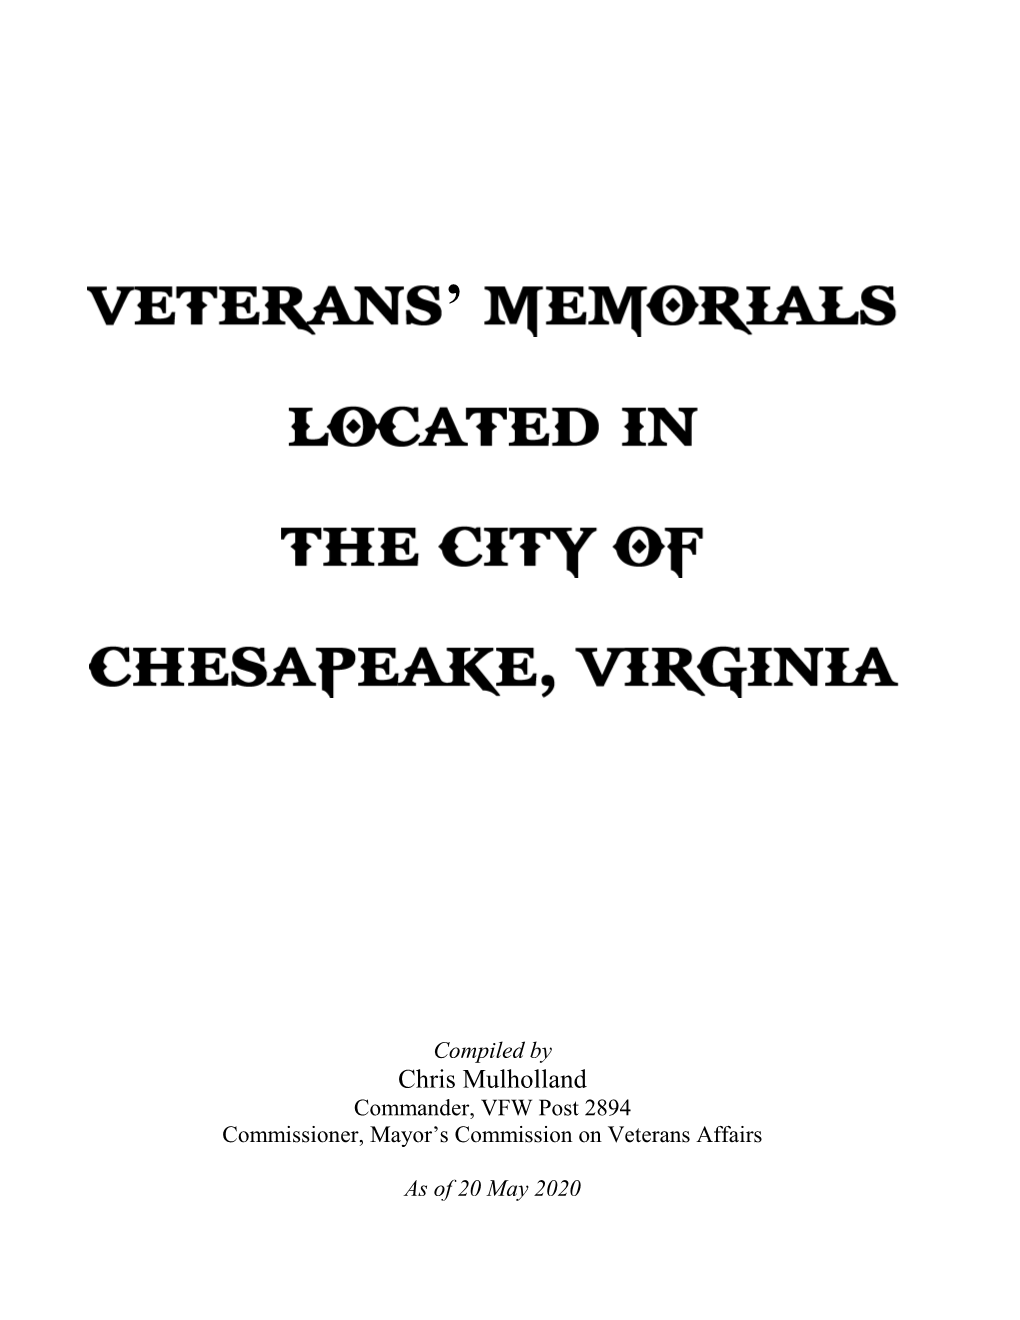 Veterans' Memorials Located in the City of Chesapeake